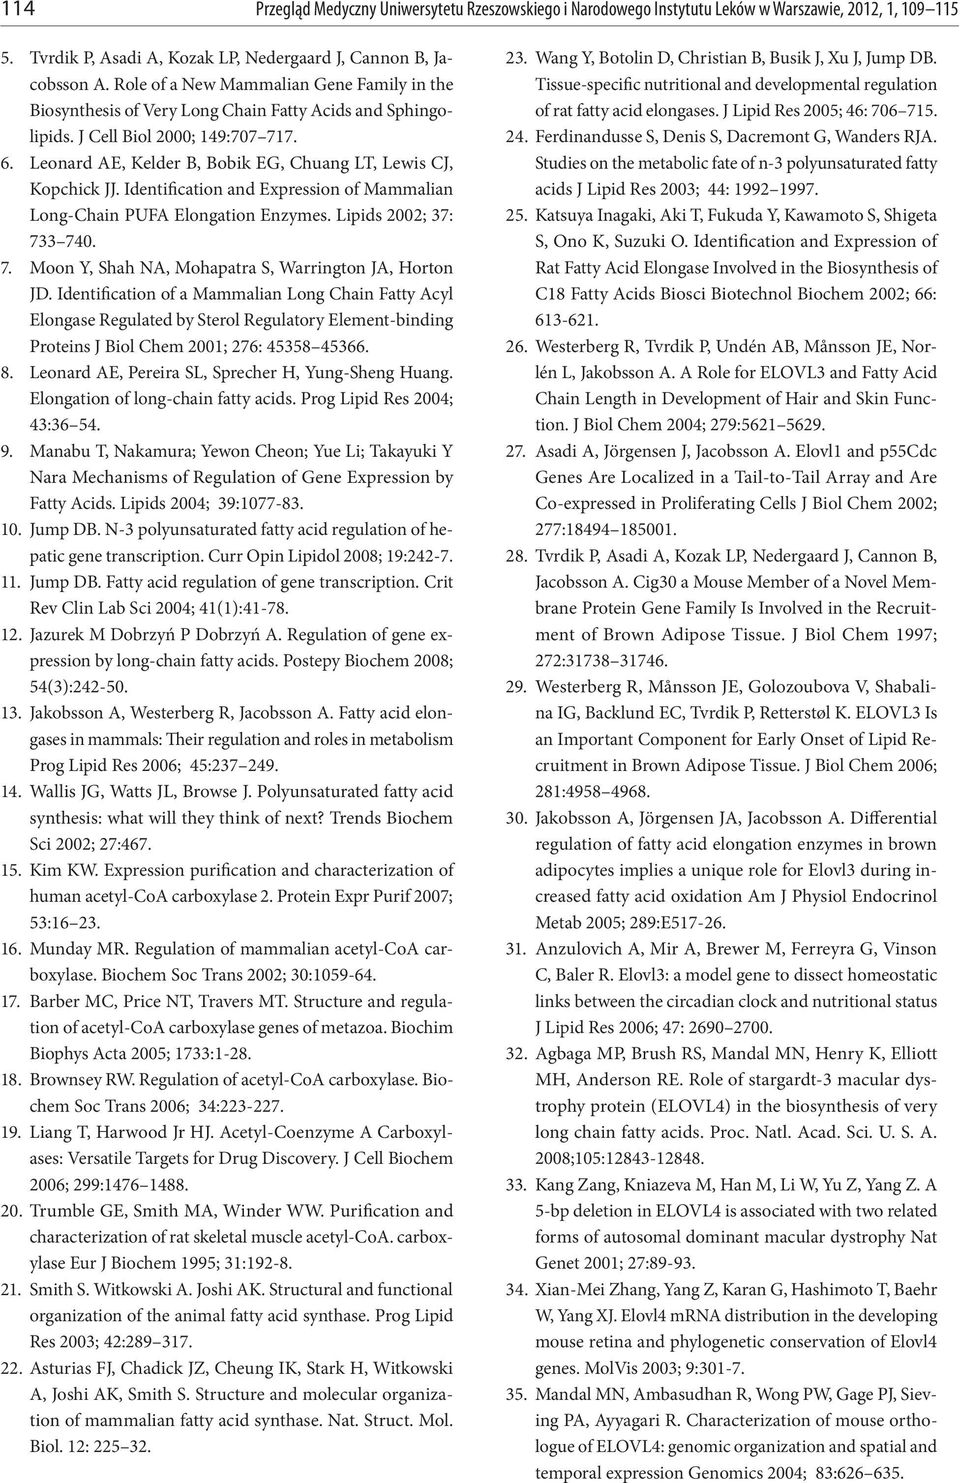 Leonard AE, Kelder B, Bobik EG, Chuang LT, Lewis CJ, Kopchick JJ. Identification and Expression of Mammalian Long-Chain PUFA Elongation Enzymes. Lipids 2002; 37: 73